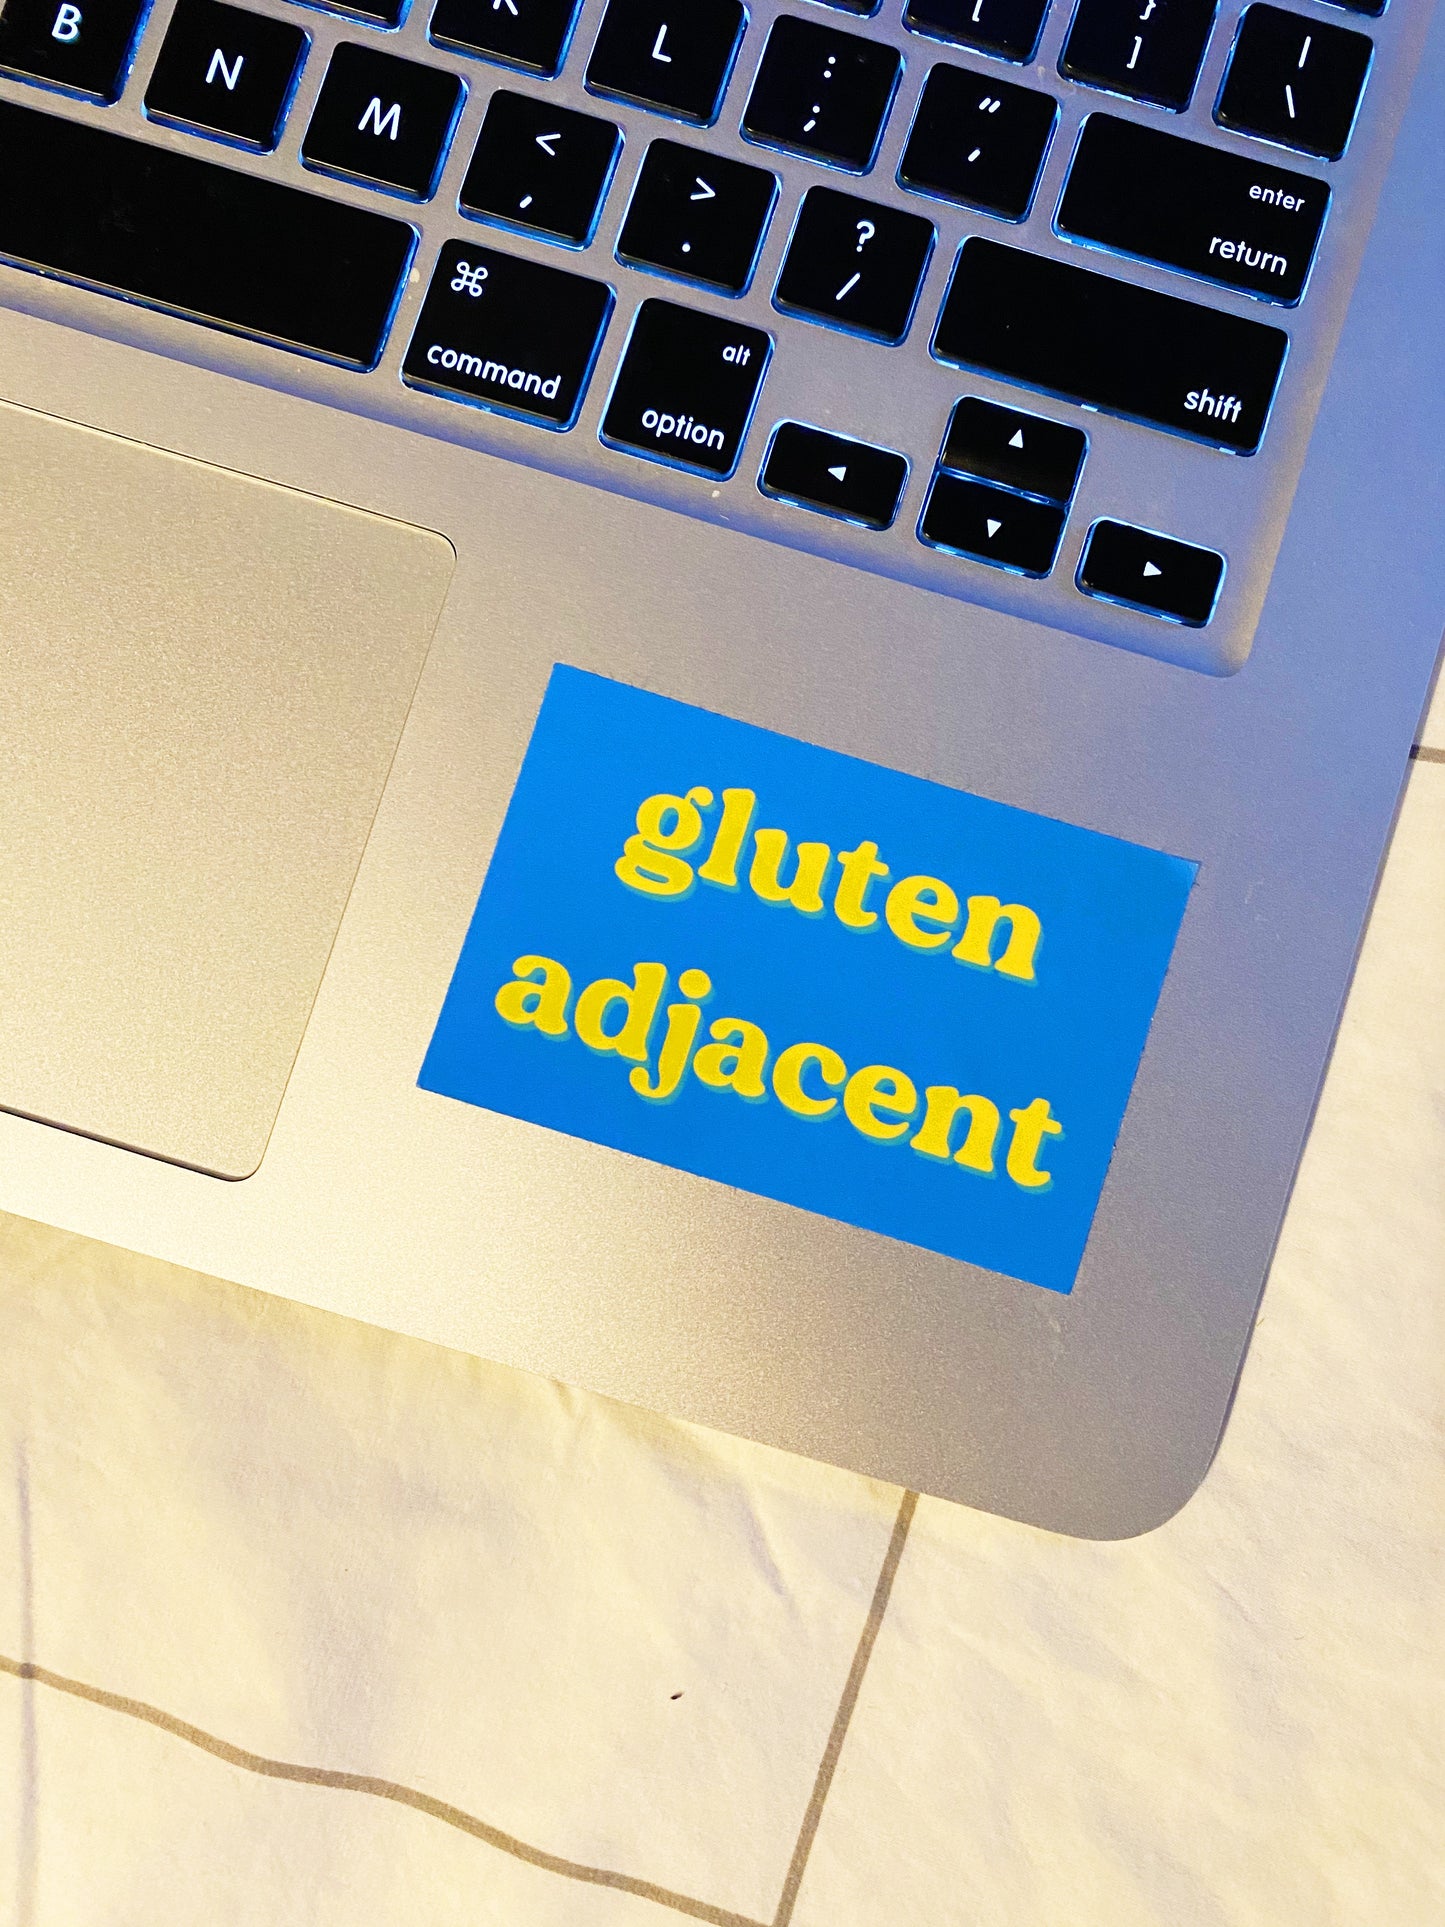 Gluten Adjacent